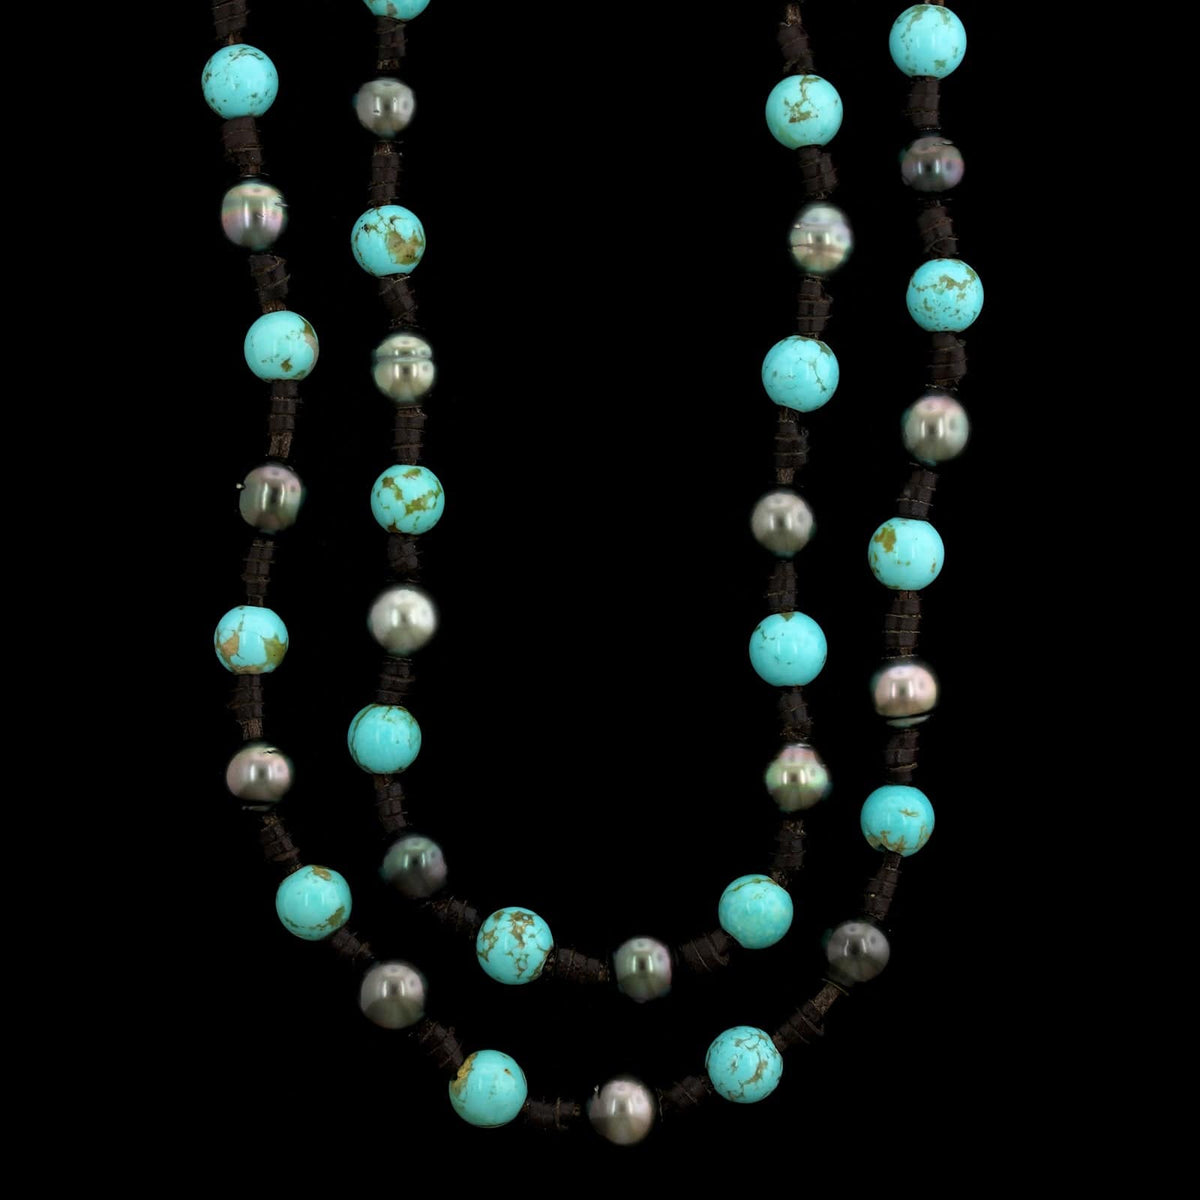 Trésors de St Barth - Black Tahitian pearls necklace from St Barth island !